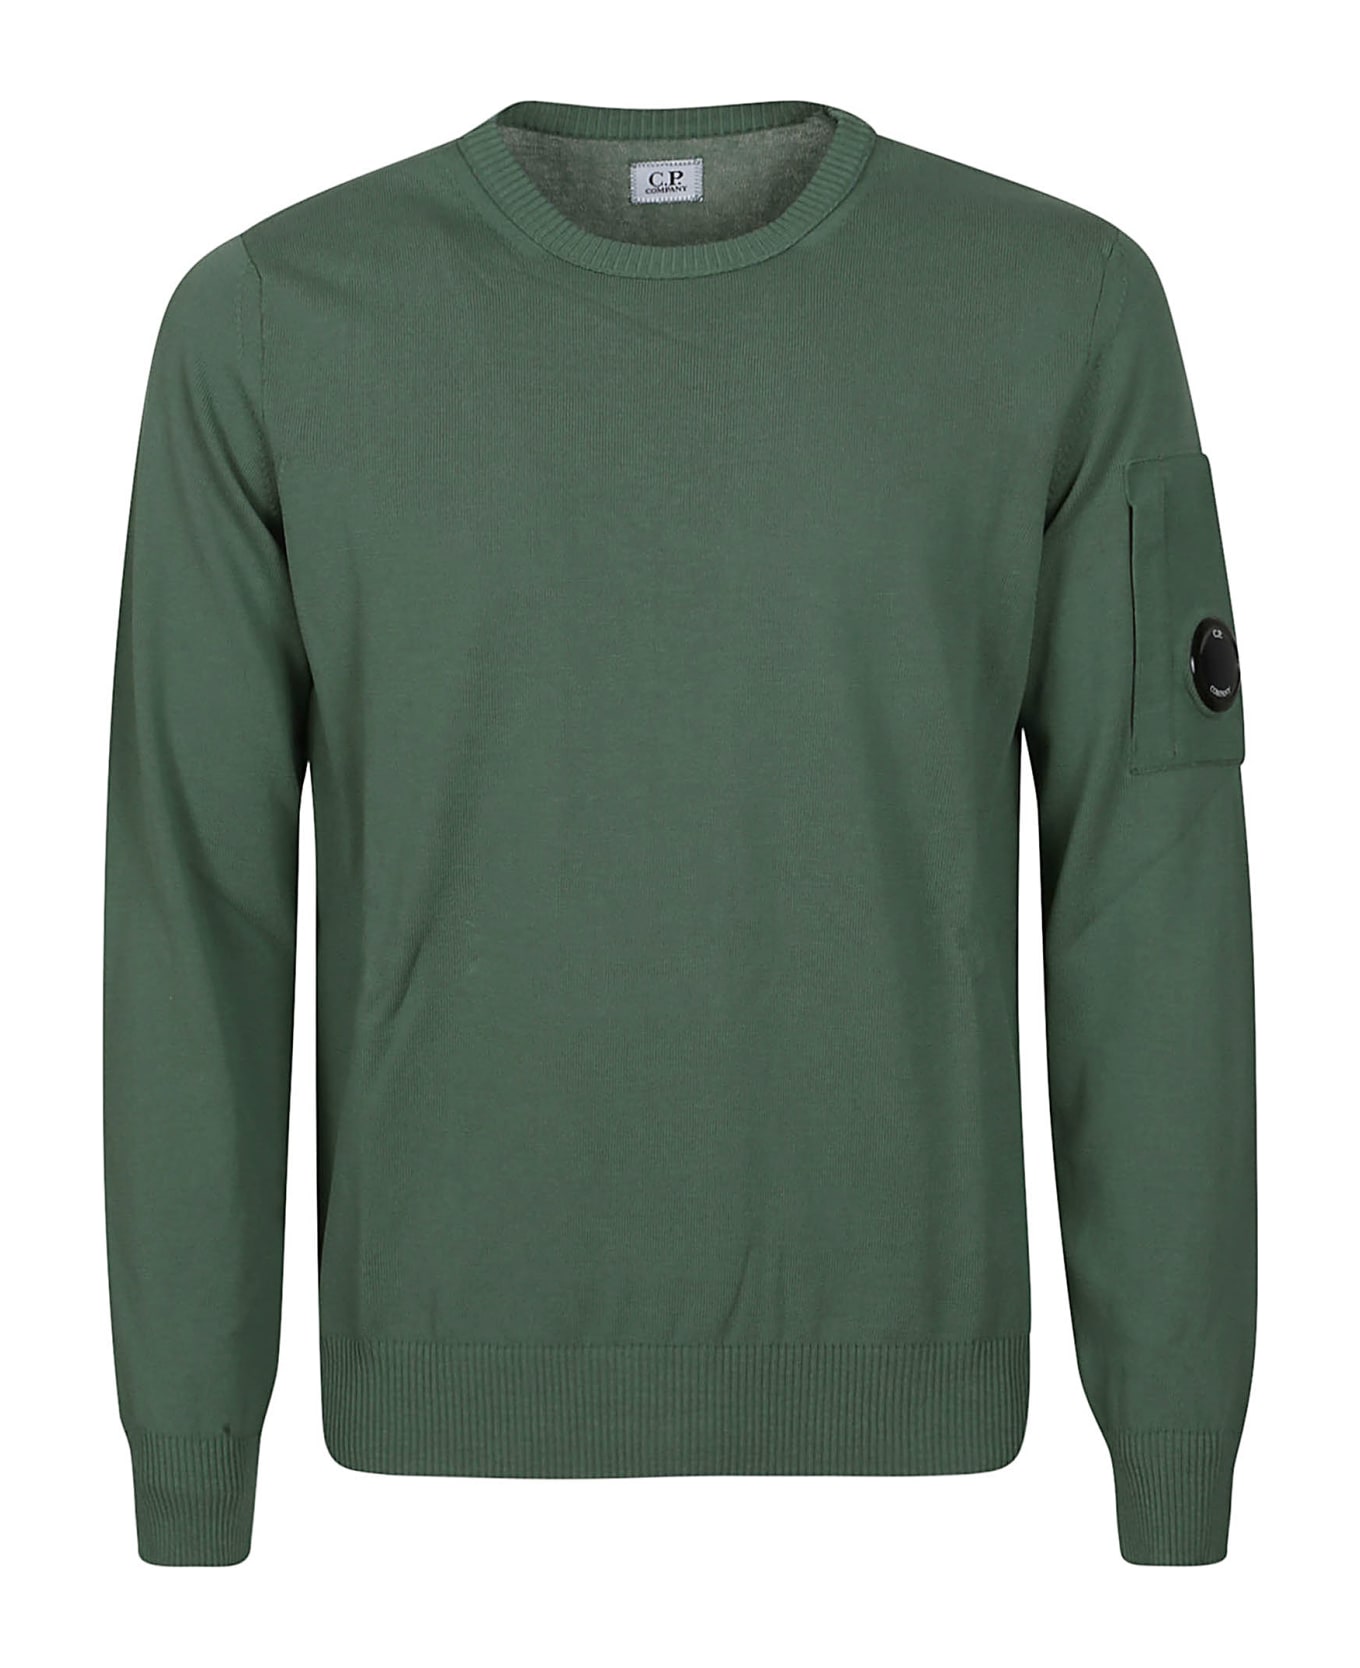 C.P. Company Sweater - Duck Green